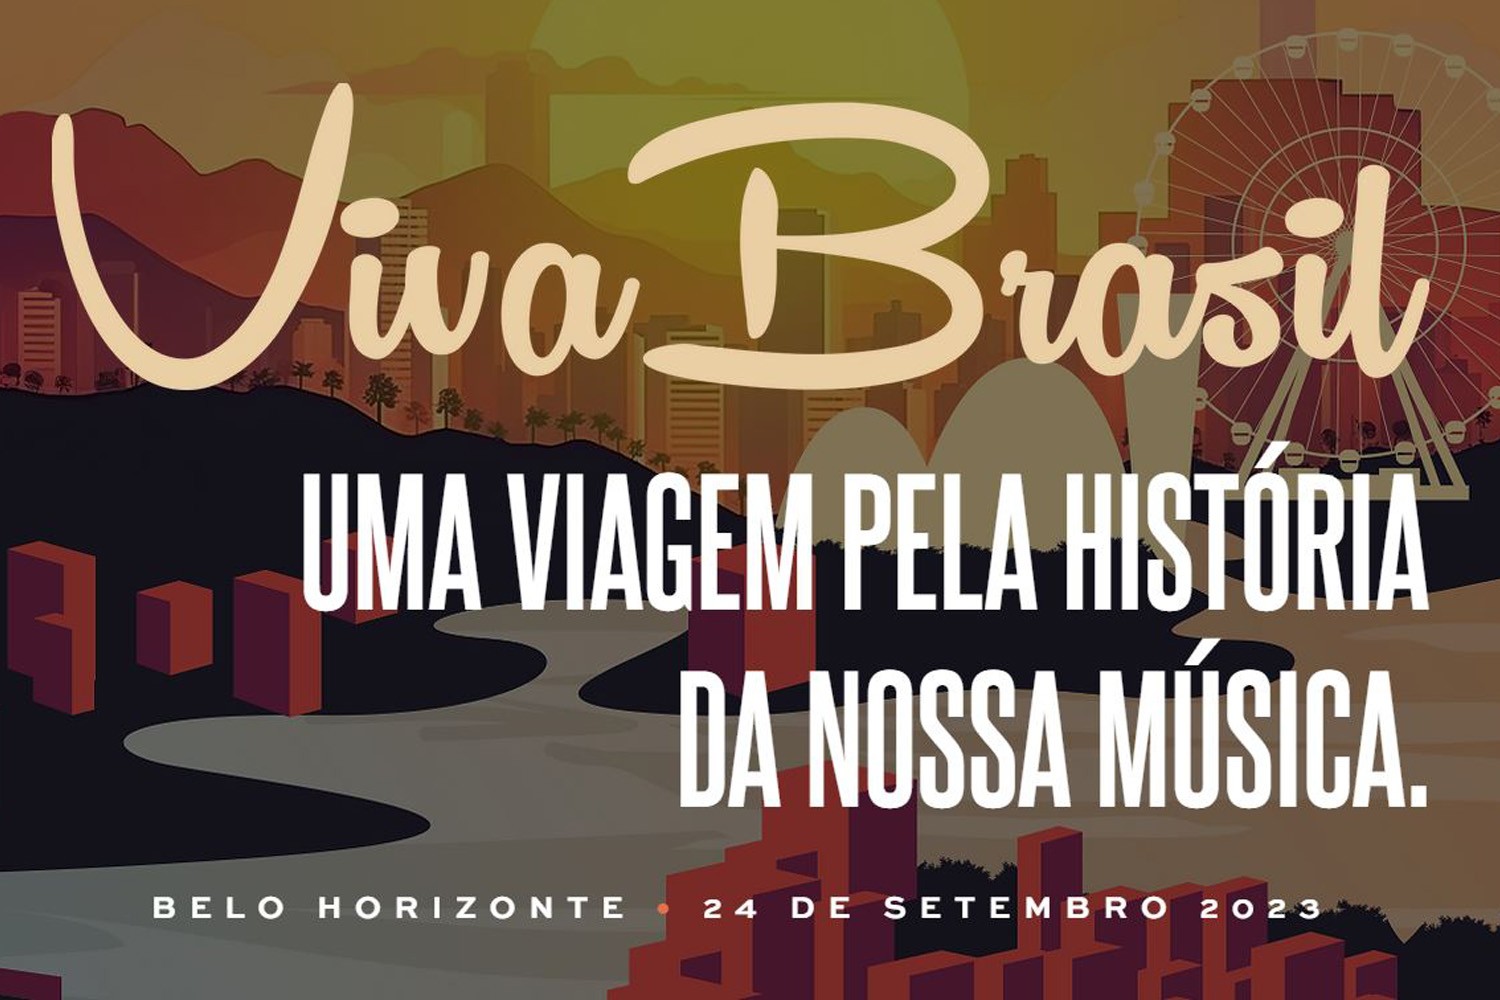 Festival Viva Brasil acontece em BH